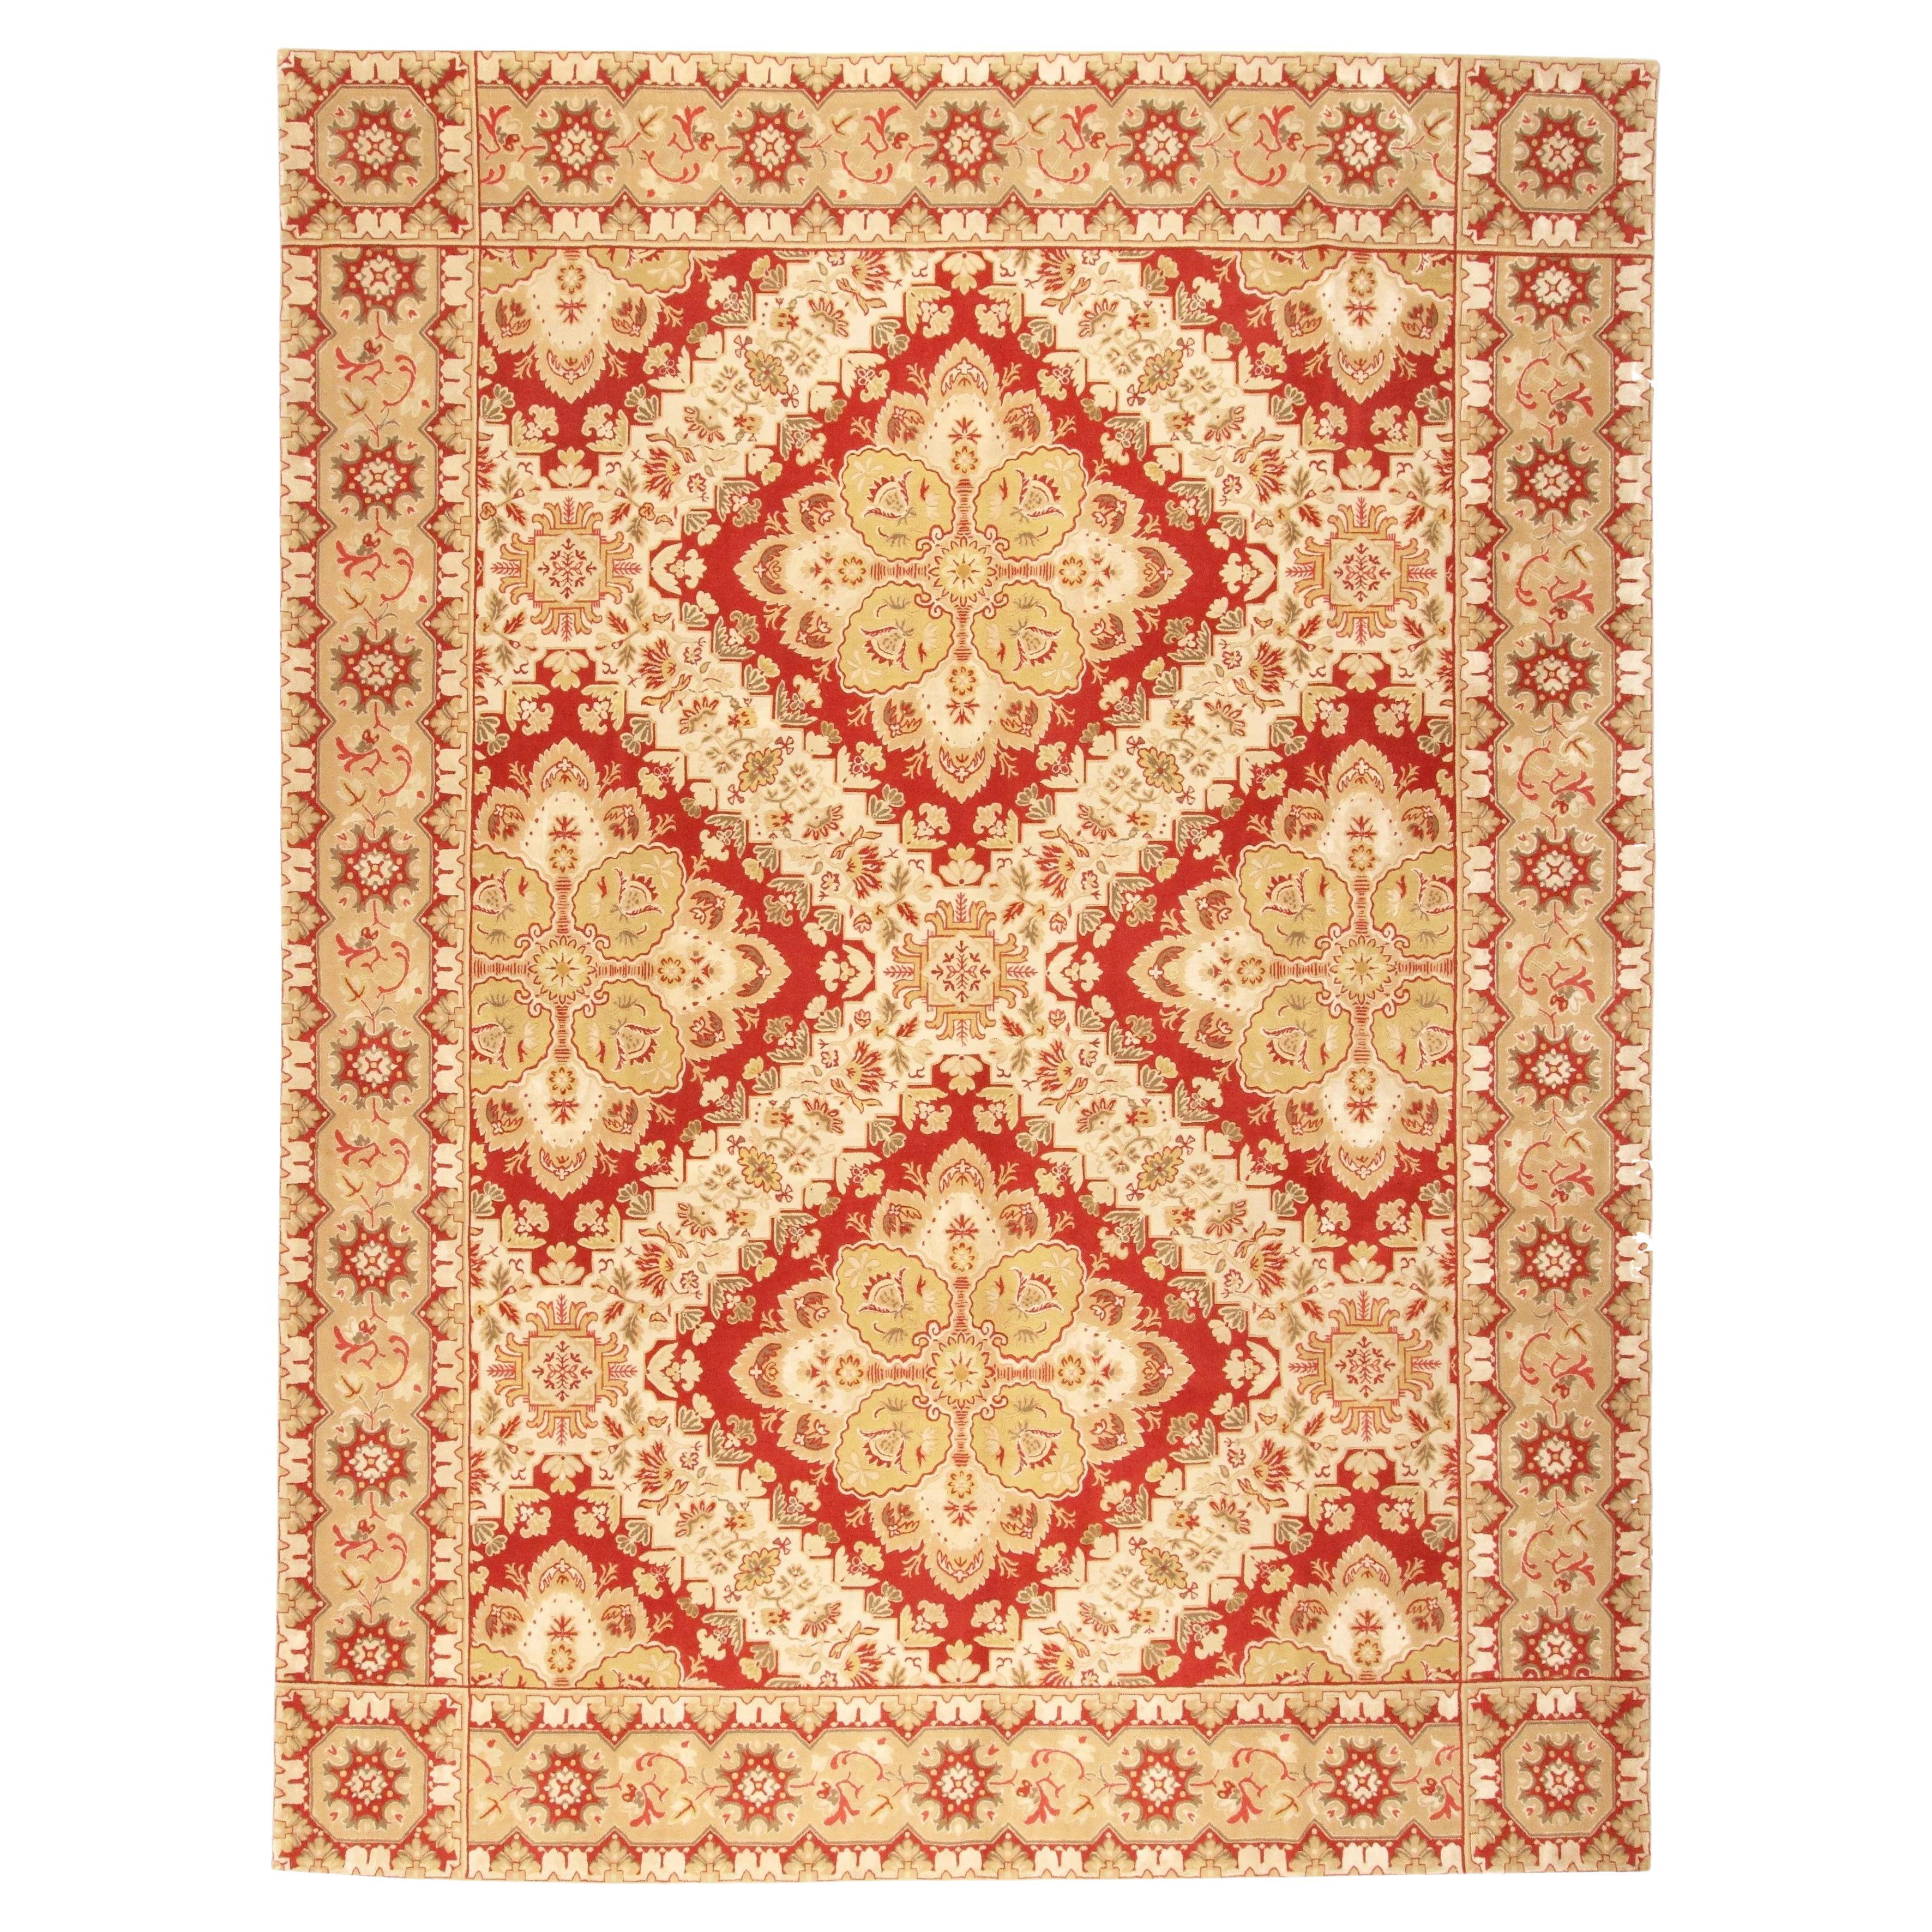 VIA COMO 'Venier' Wool & Silk Hand Knotted Rug 9x12 ft One of a Kind RARE Carpet For Sale